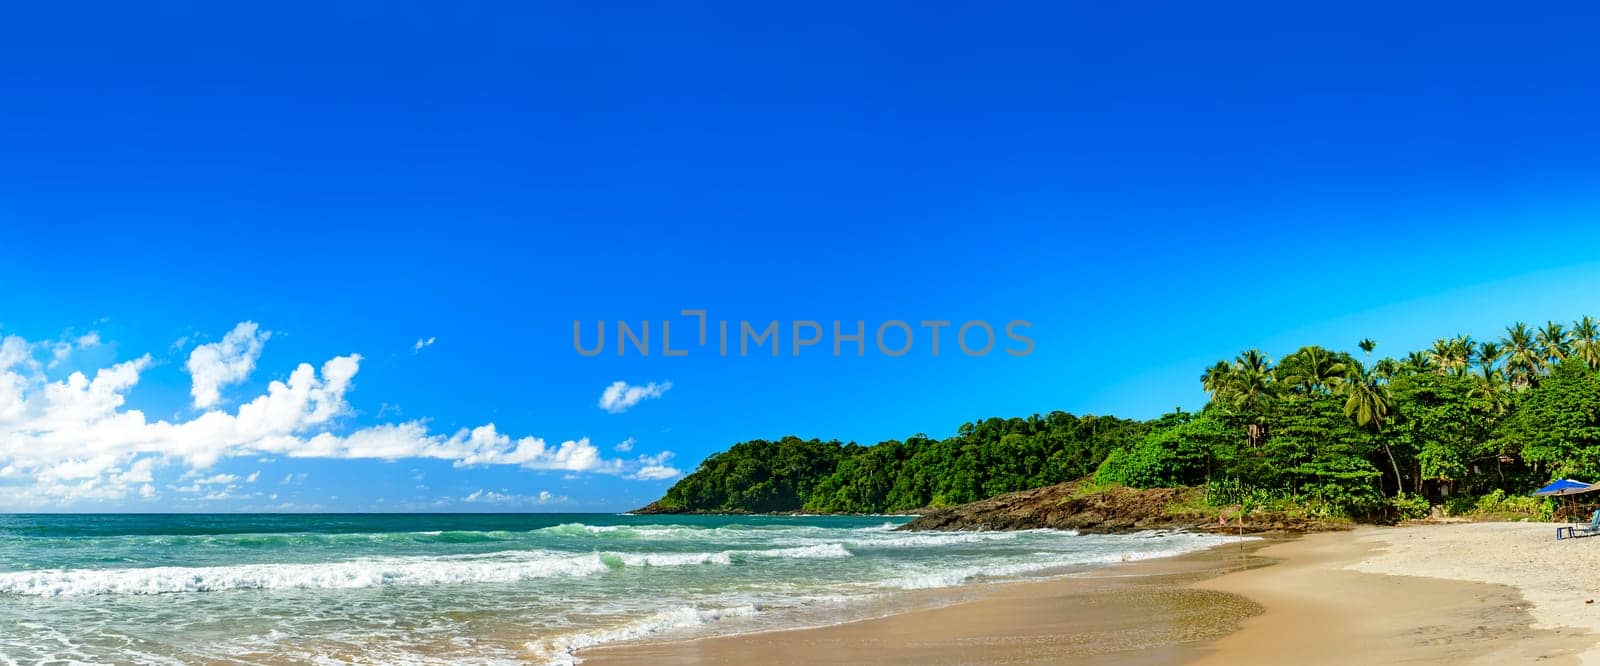 Panoramic image of the stunning Tiririca beach in Itacare on the south coast of Bahia